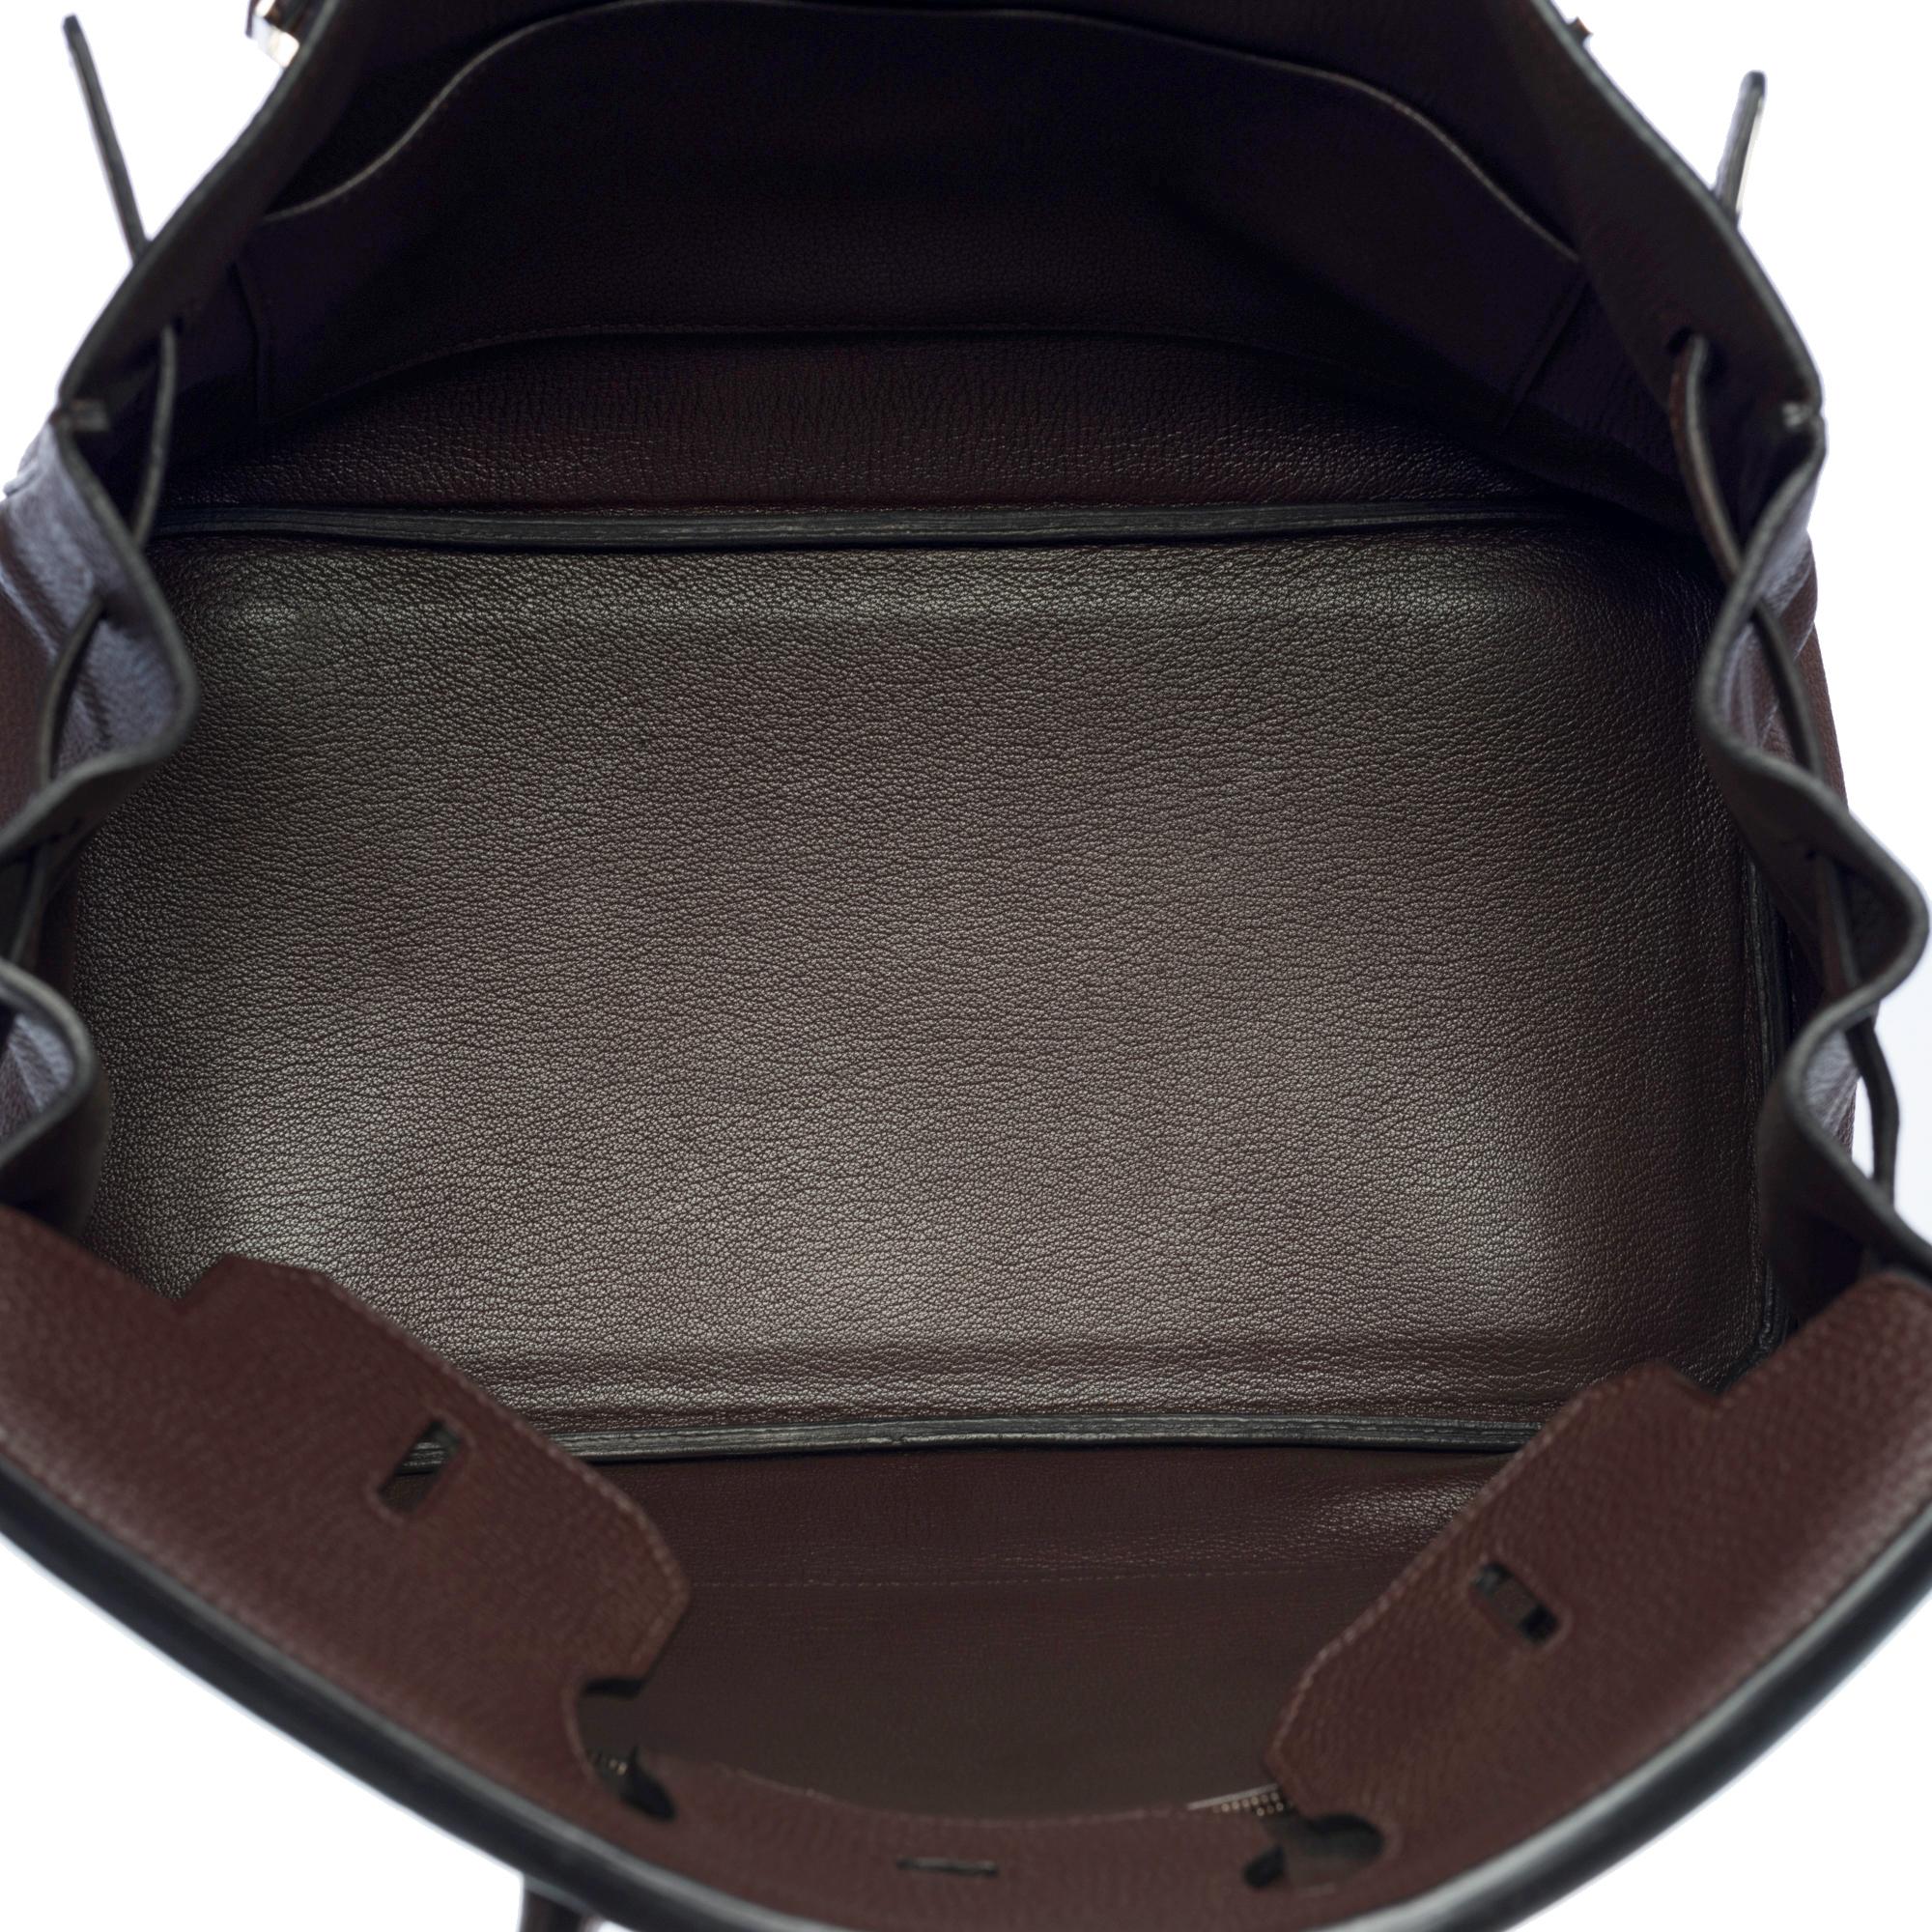 Splendid Hermès Birkin 35 handbag in brown Taurillon Clémence leather, SHW 2